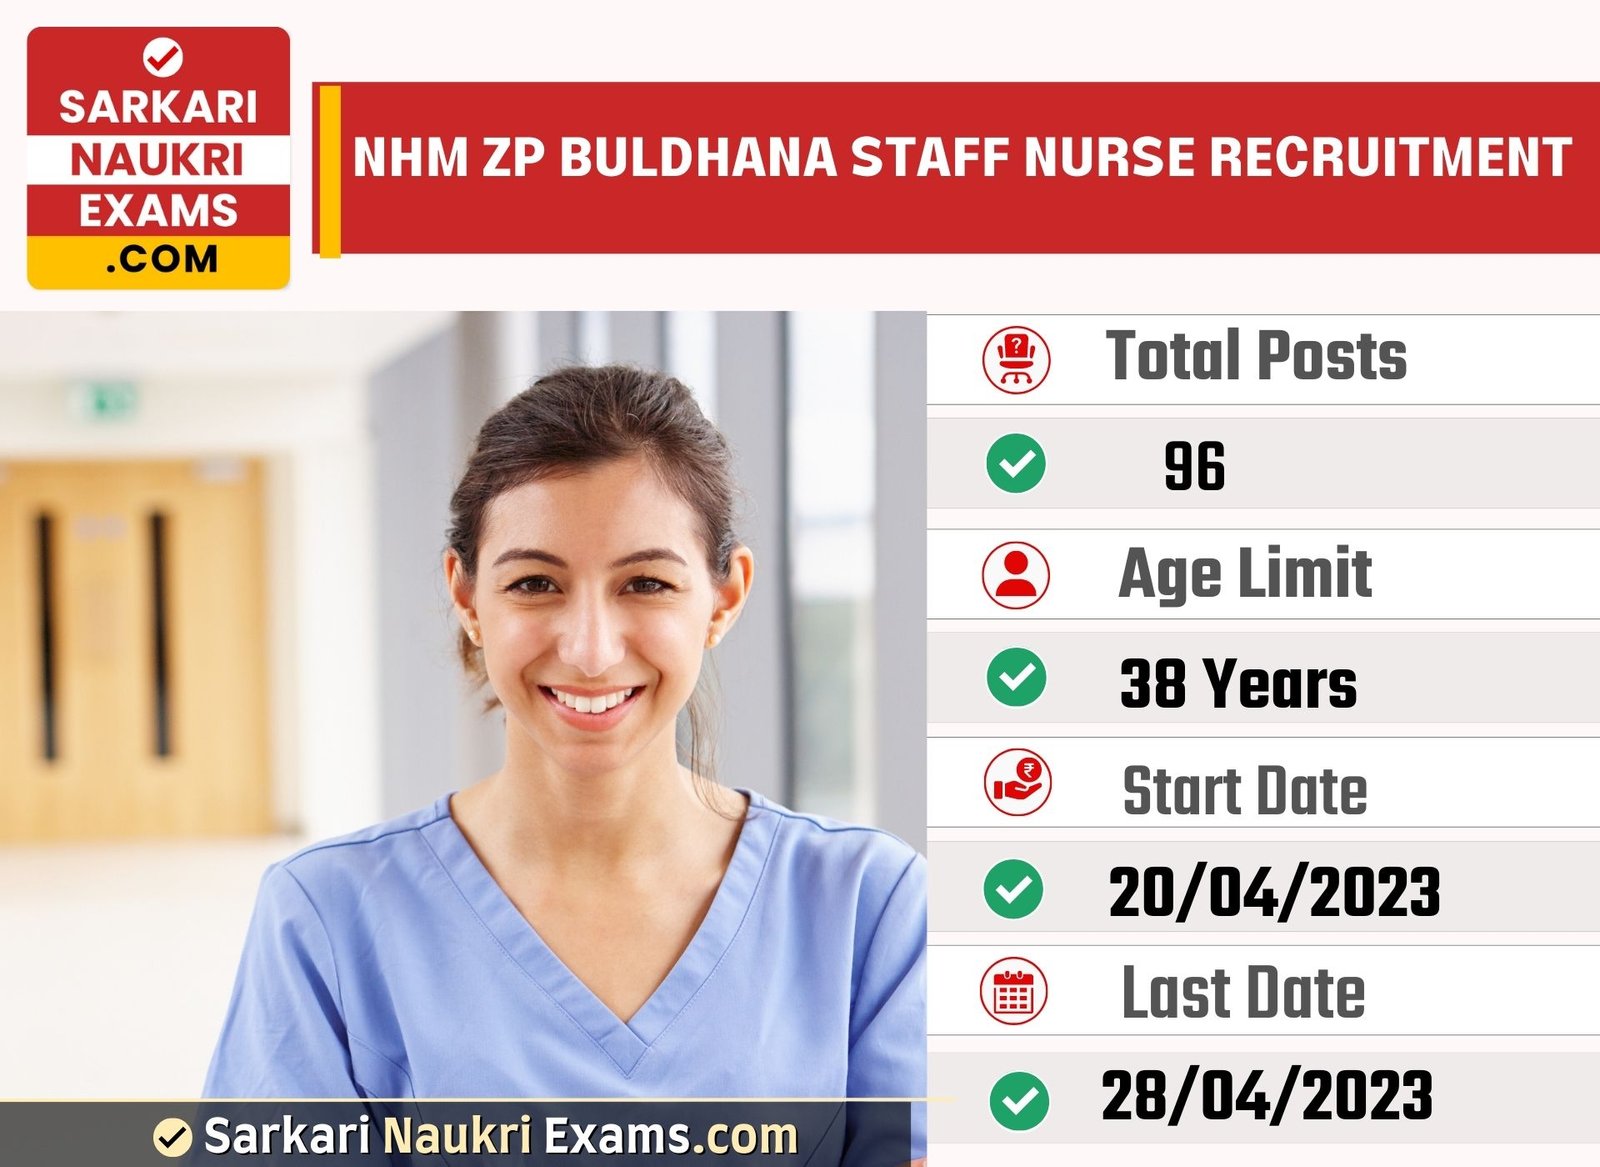 NHM ZP Buldhana Staff Nurse, Medical Officer Recruitment Form 2023 | Salary Up to 60000/-